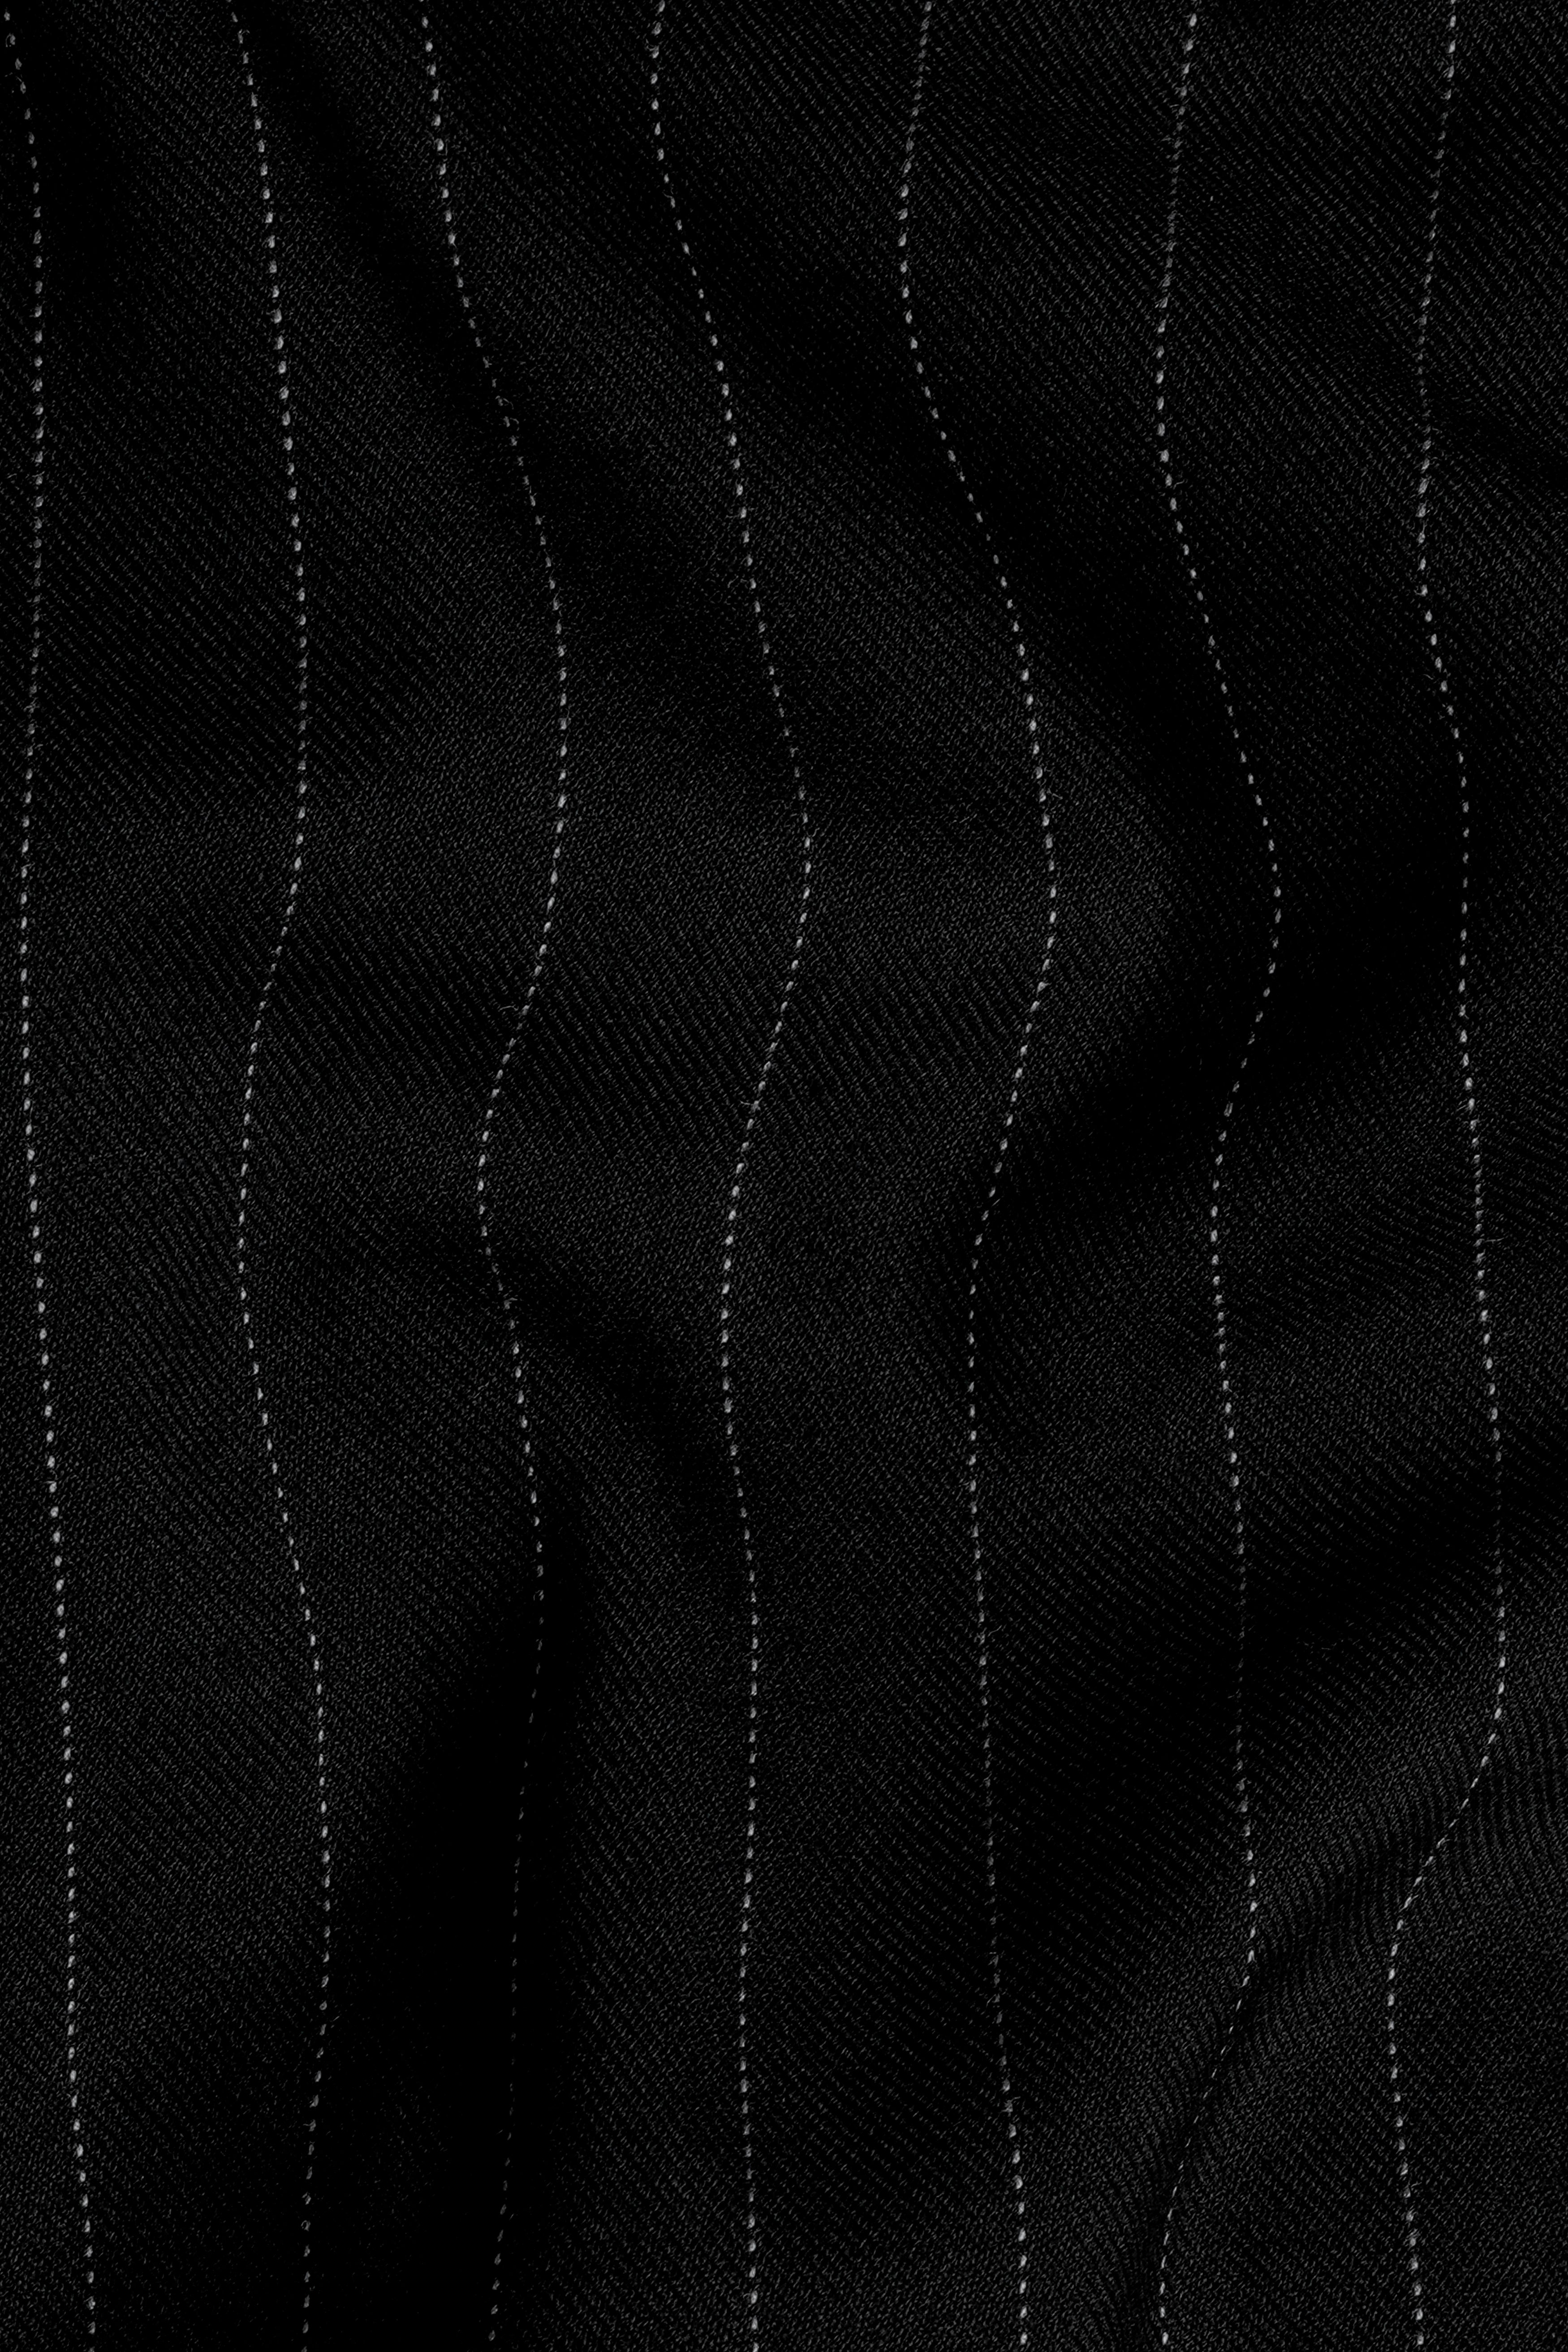 Jade Black and White Striped Wool Rich Waistcoat